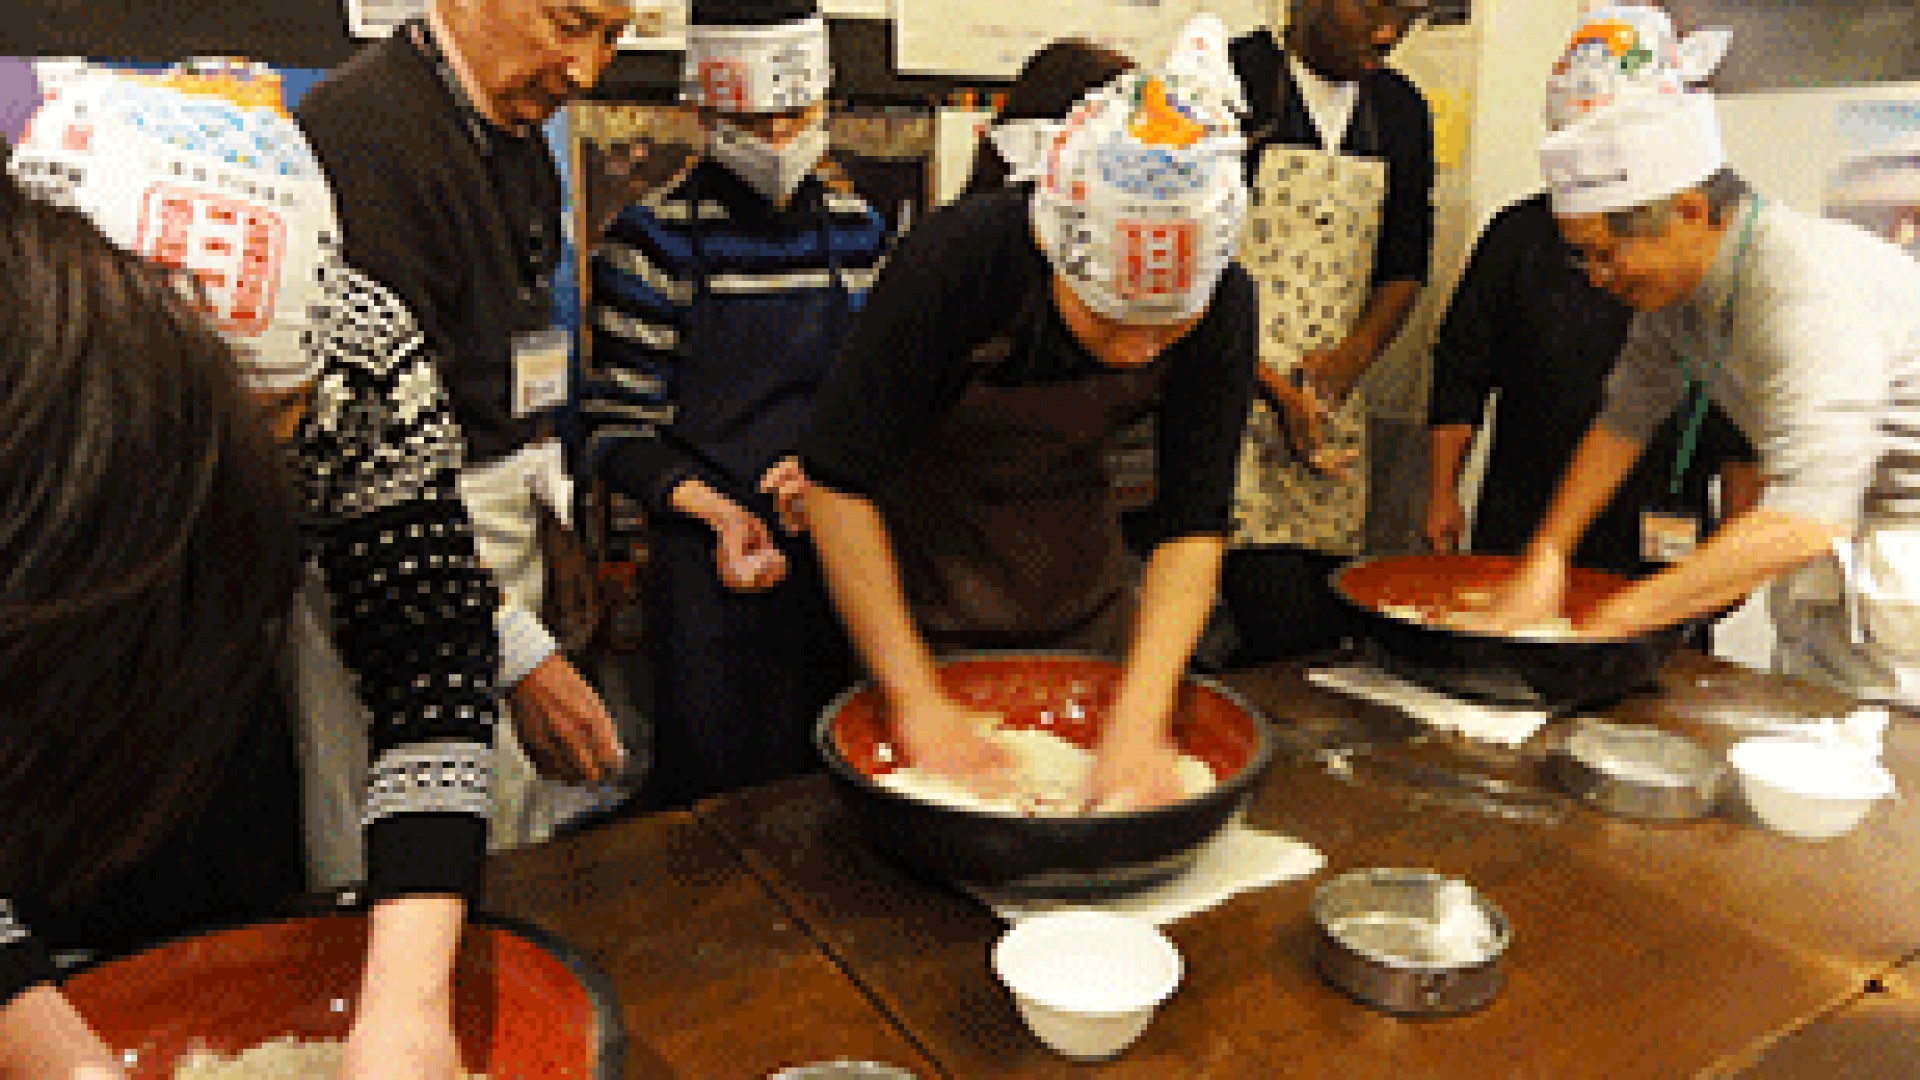 Matsumotokan (cours de cuisine des pâtes Soba)